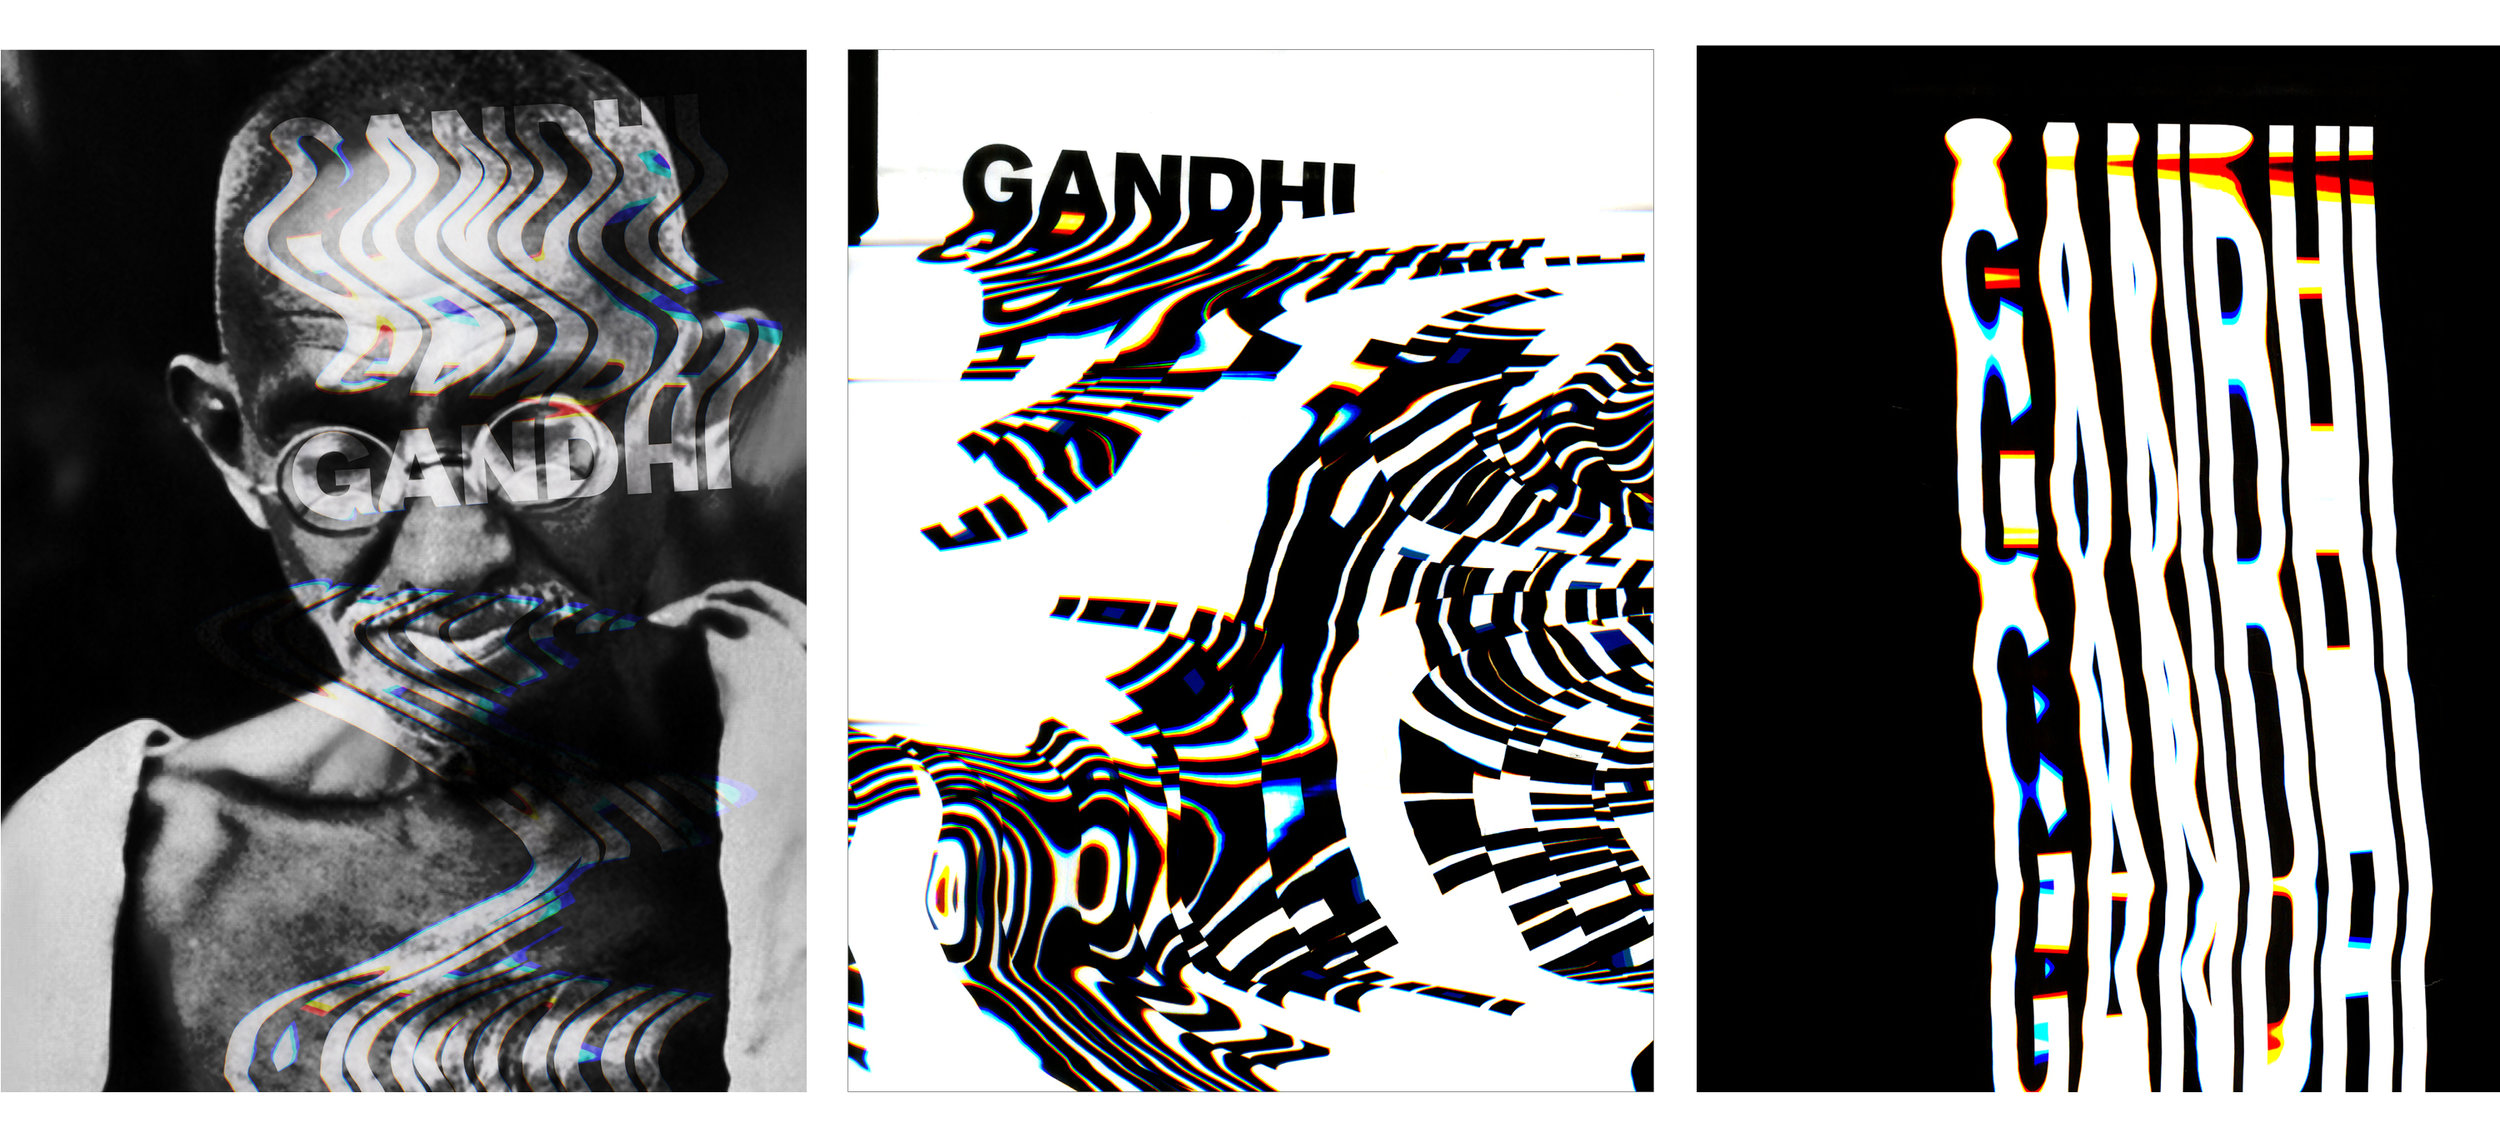 gandhi-concept2.jpg